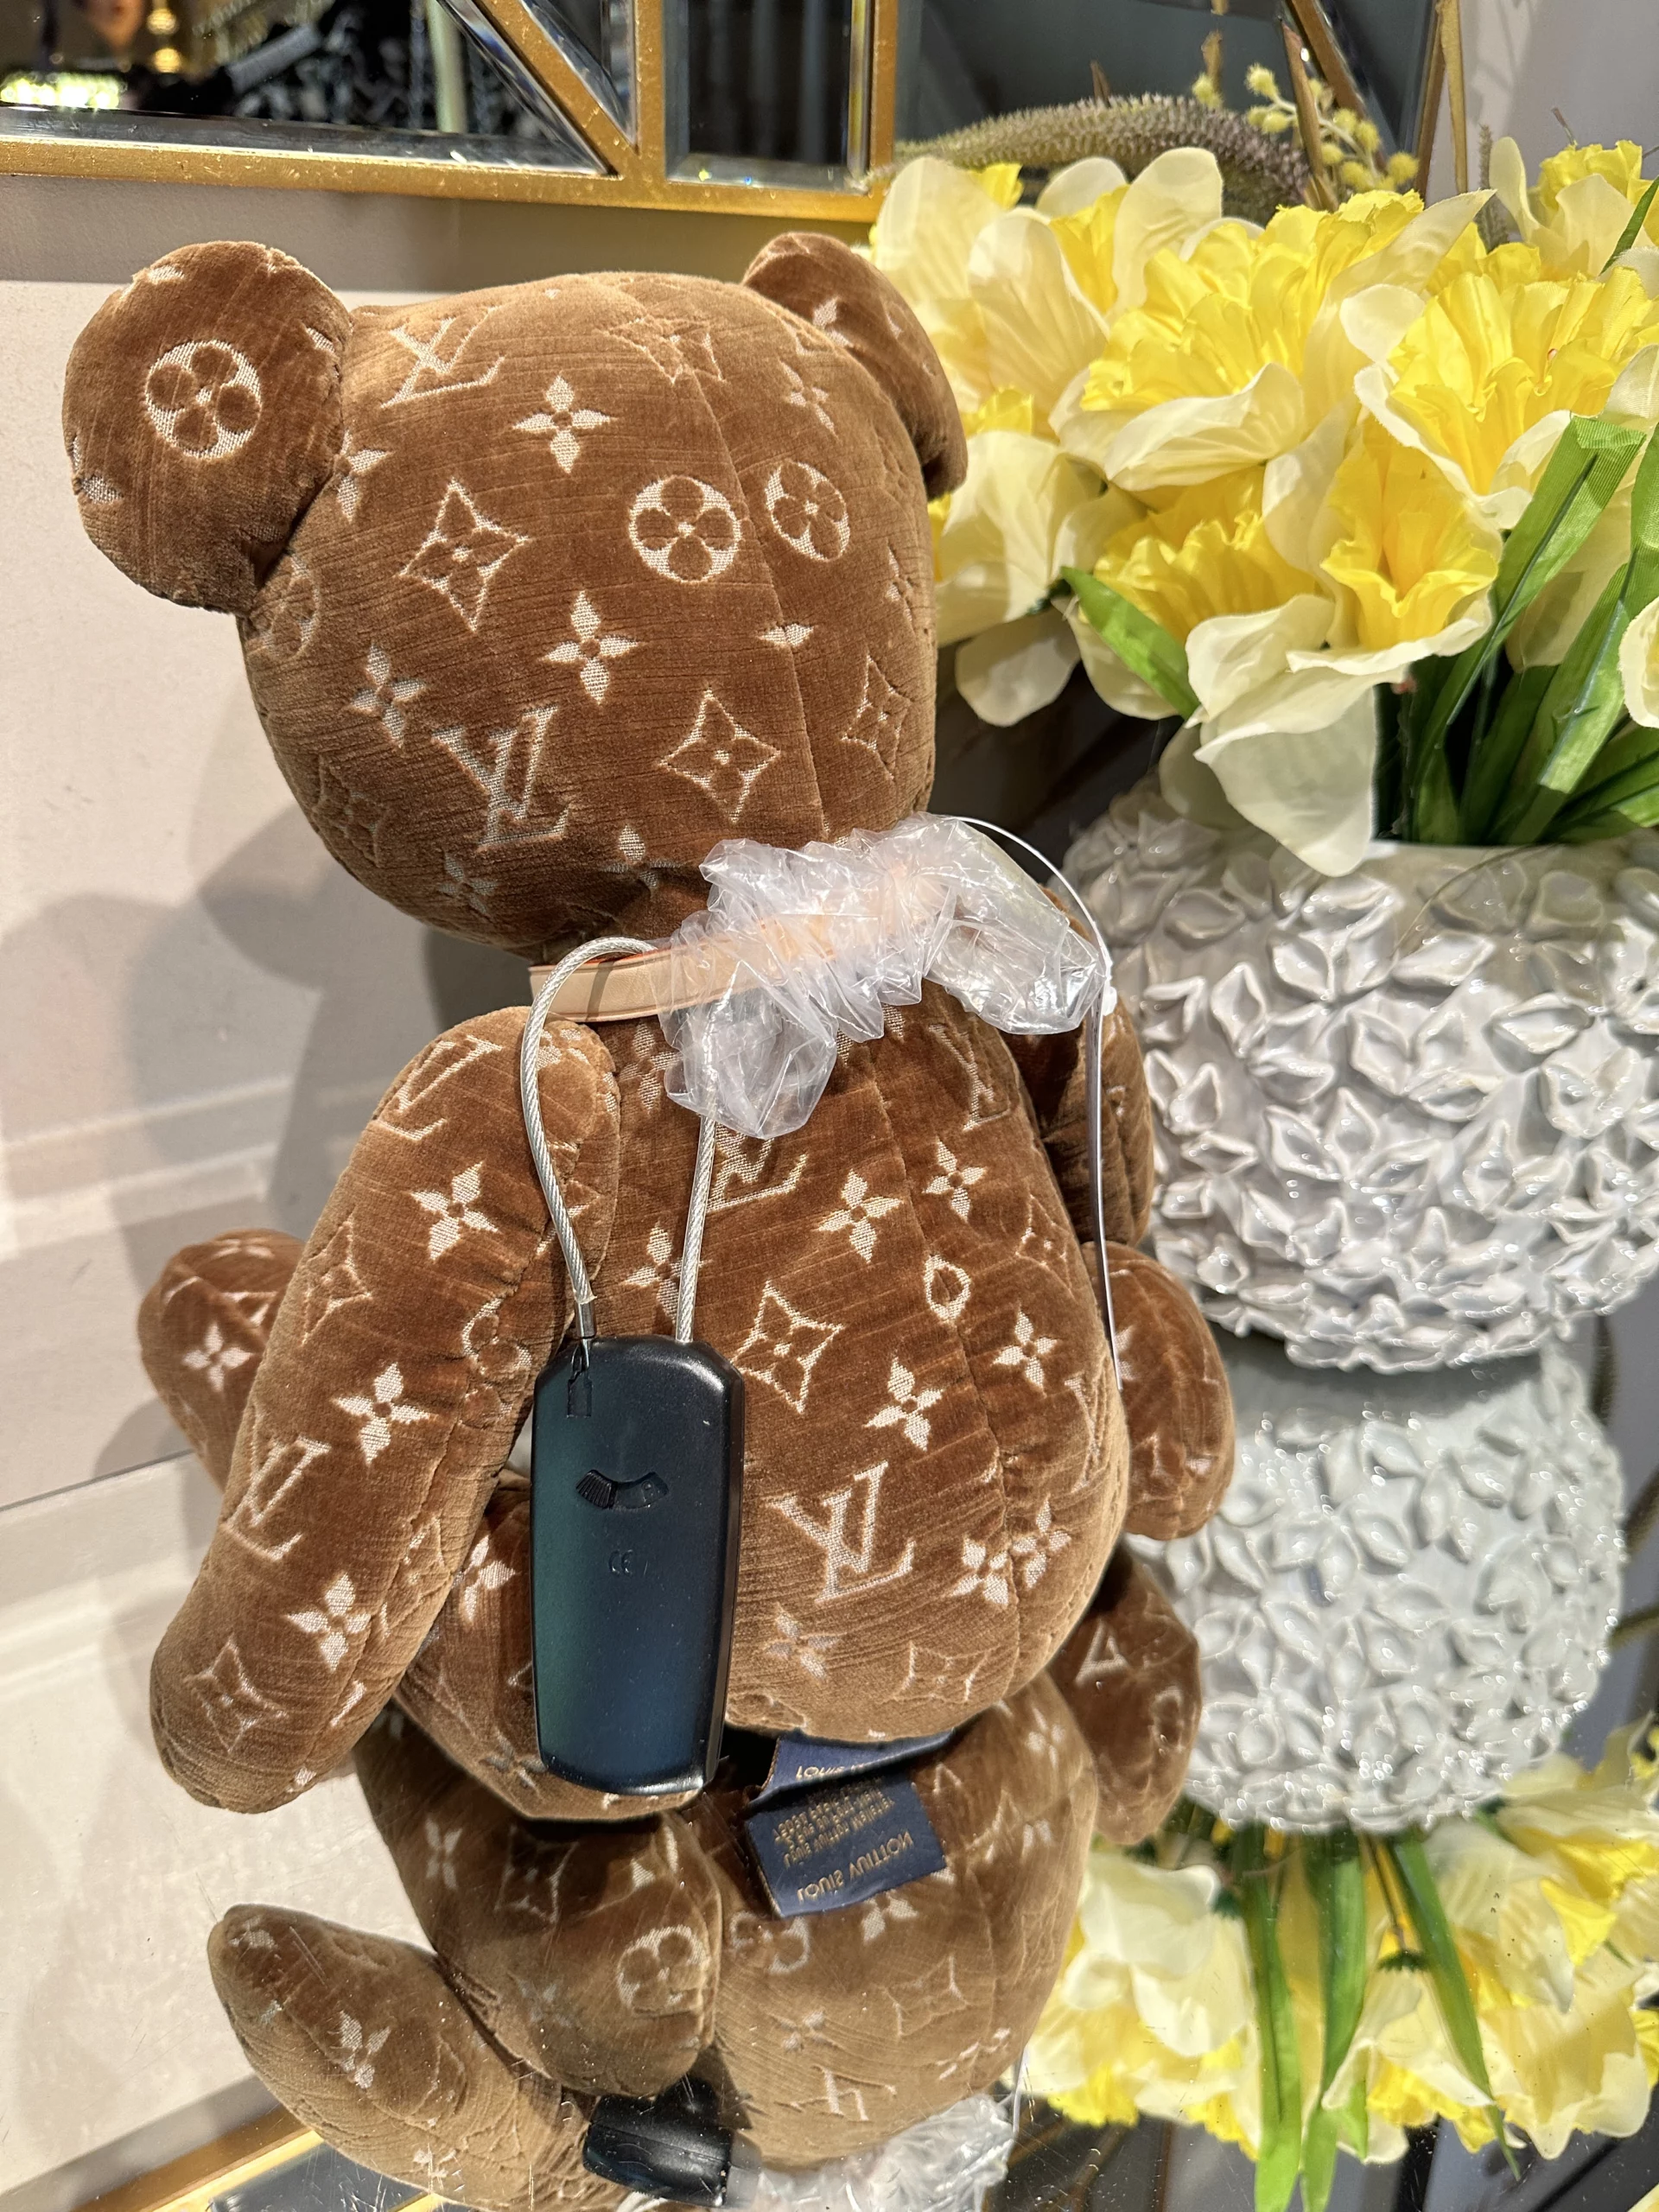 Louis Vuitton Doudou - 3 For Sale on 1stDibs  louis vuitton teddy bear, louis  vuitton doudou teddy bear, doudou louis vuitton